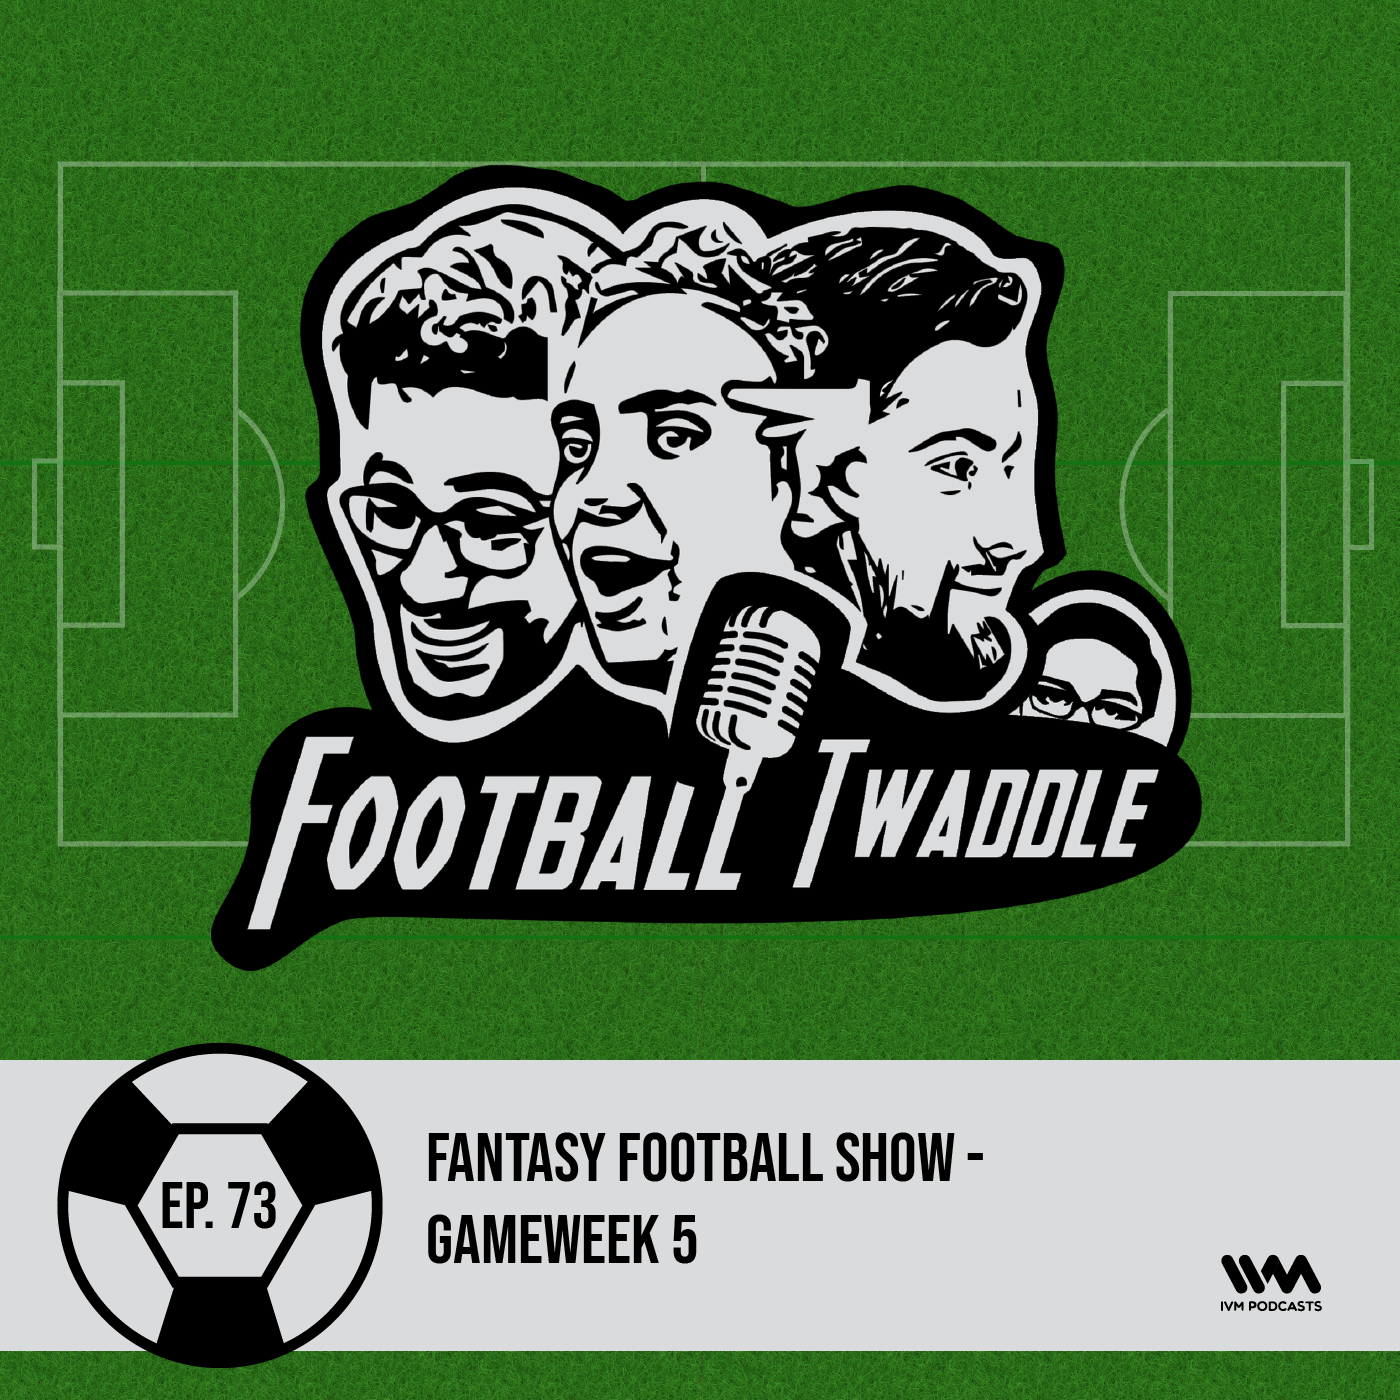 Fantasy Football Show - Gameweek 5